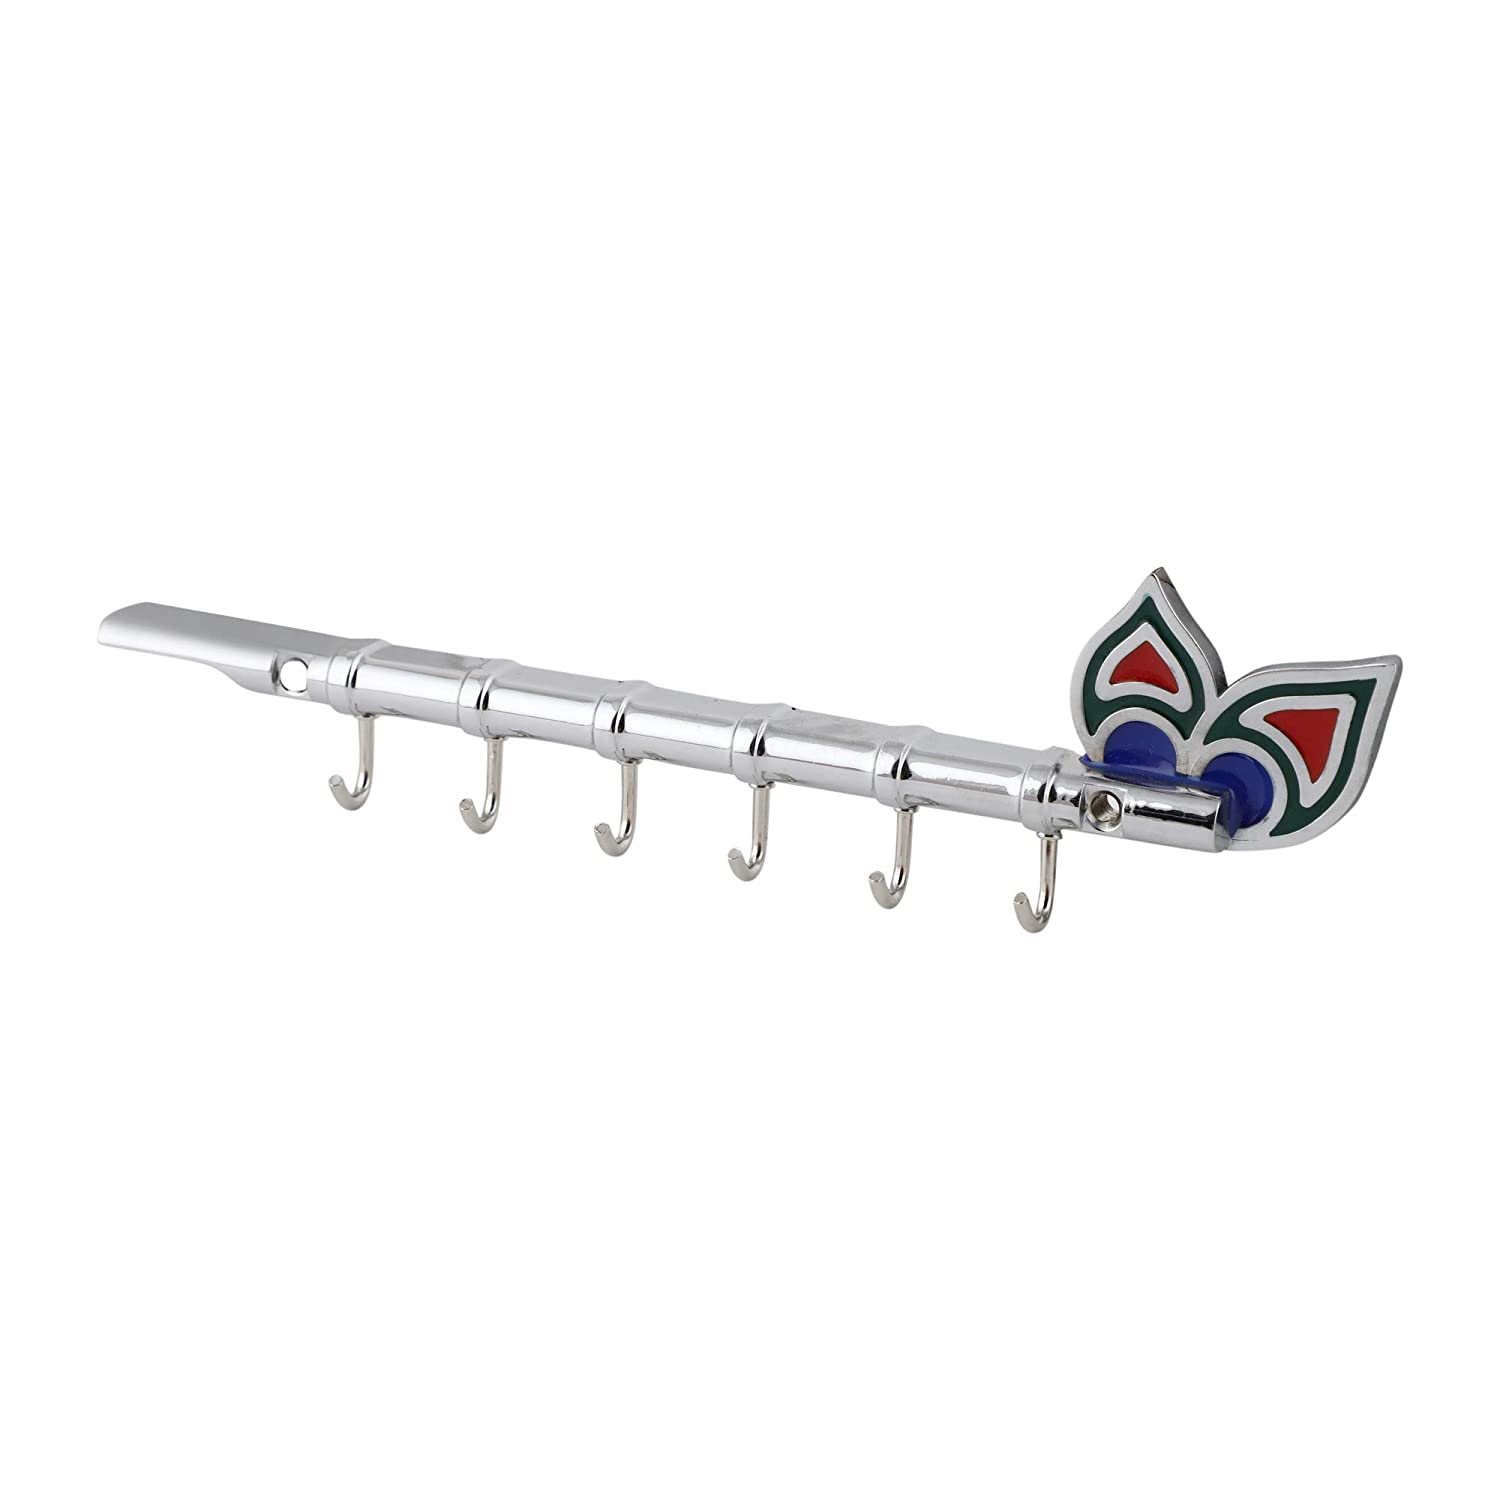 Chrome & Glossy Bansuri Key Holder for Wall - 6 Pin Key Hanging Hooks Rail Mangal Fashions | Indian Home Decor and Craft